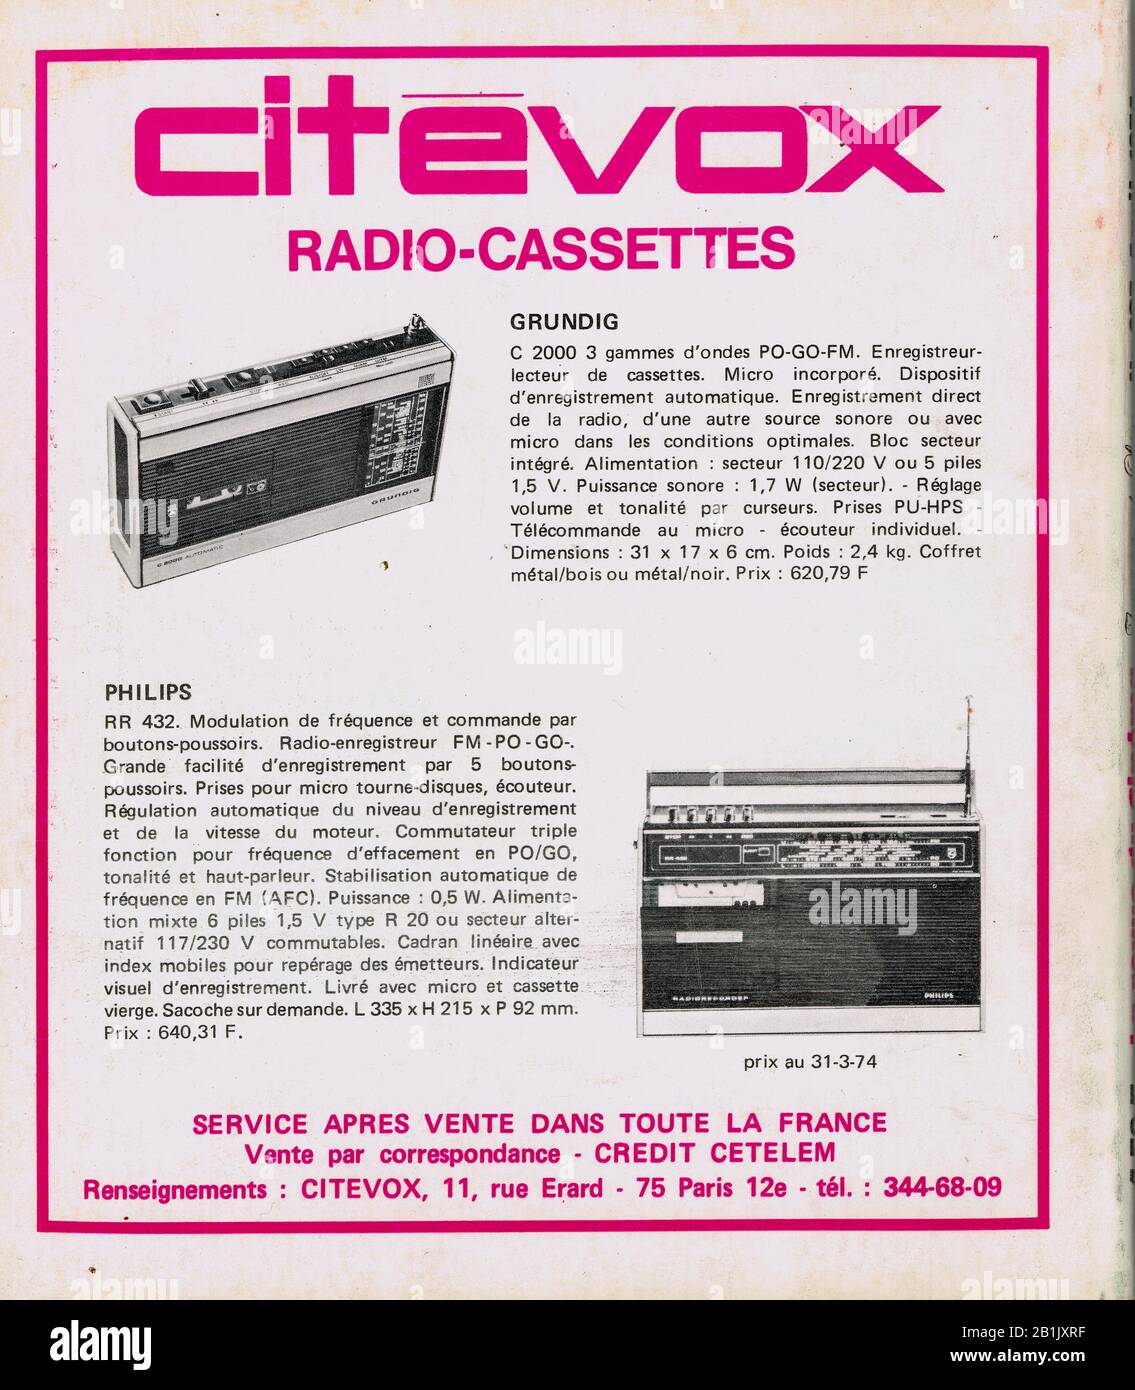 Advert for Citevox Cassette-radios, La Revue du Cinema, french cultural magazine, France Stock Photo